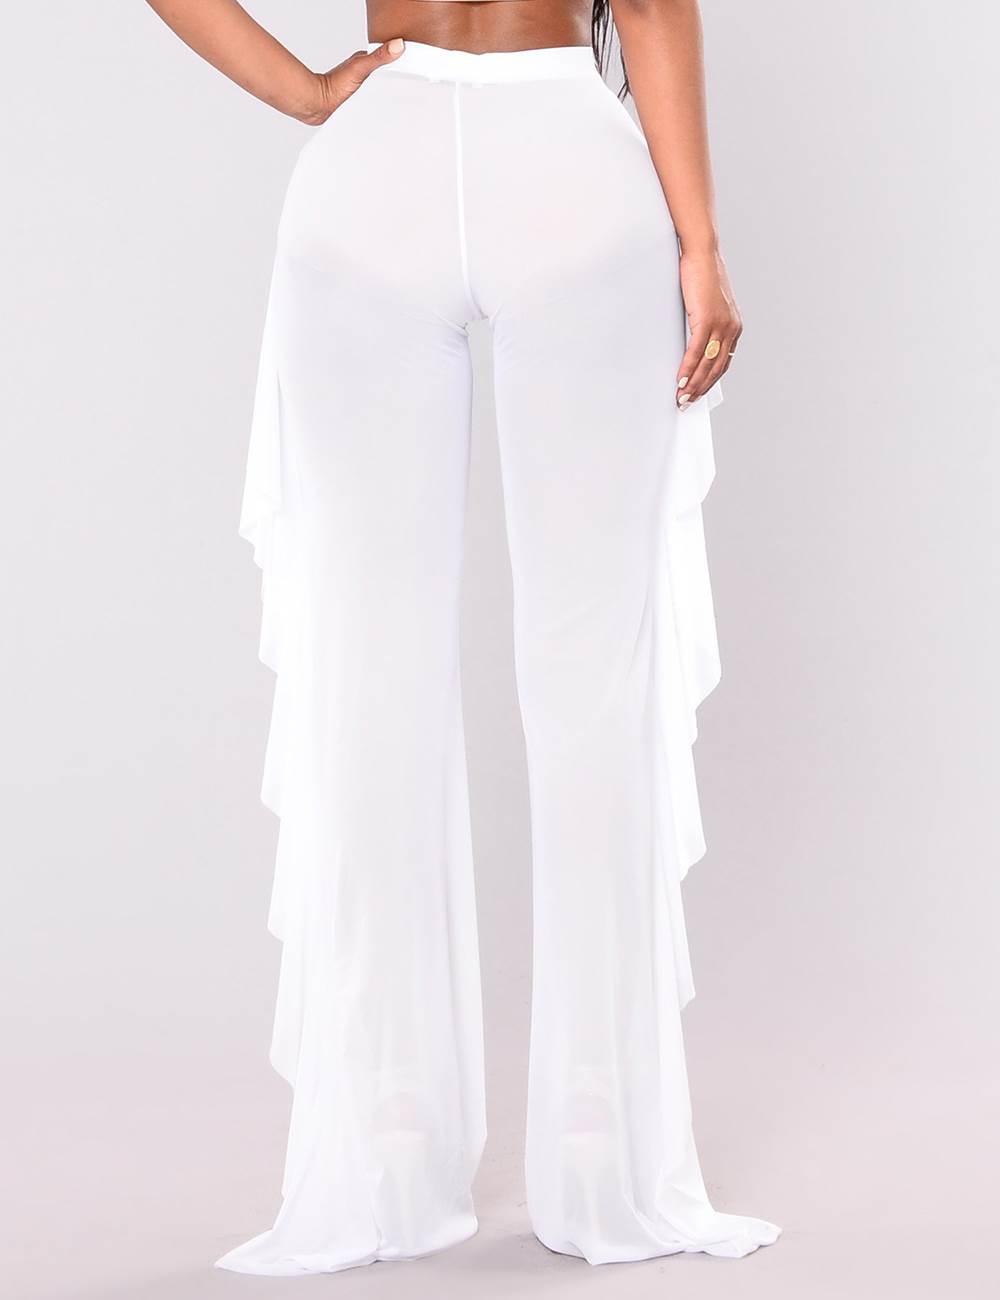 White Fashionable Women Side Ruffle Pants High Waist Stretch Fit Pants ...